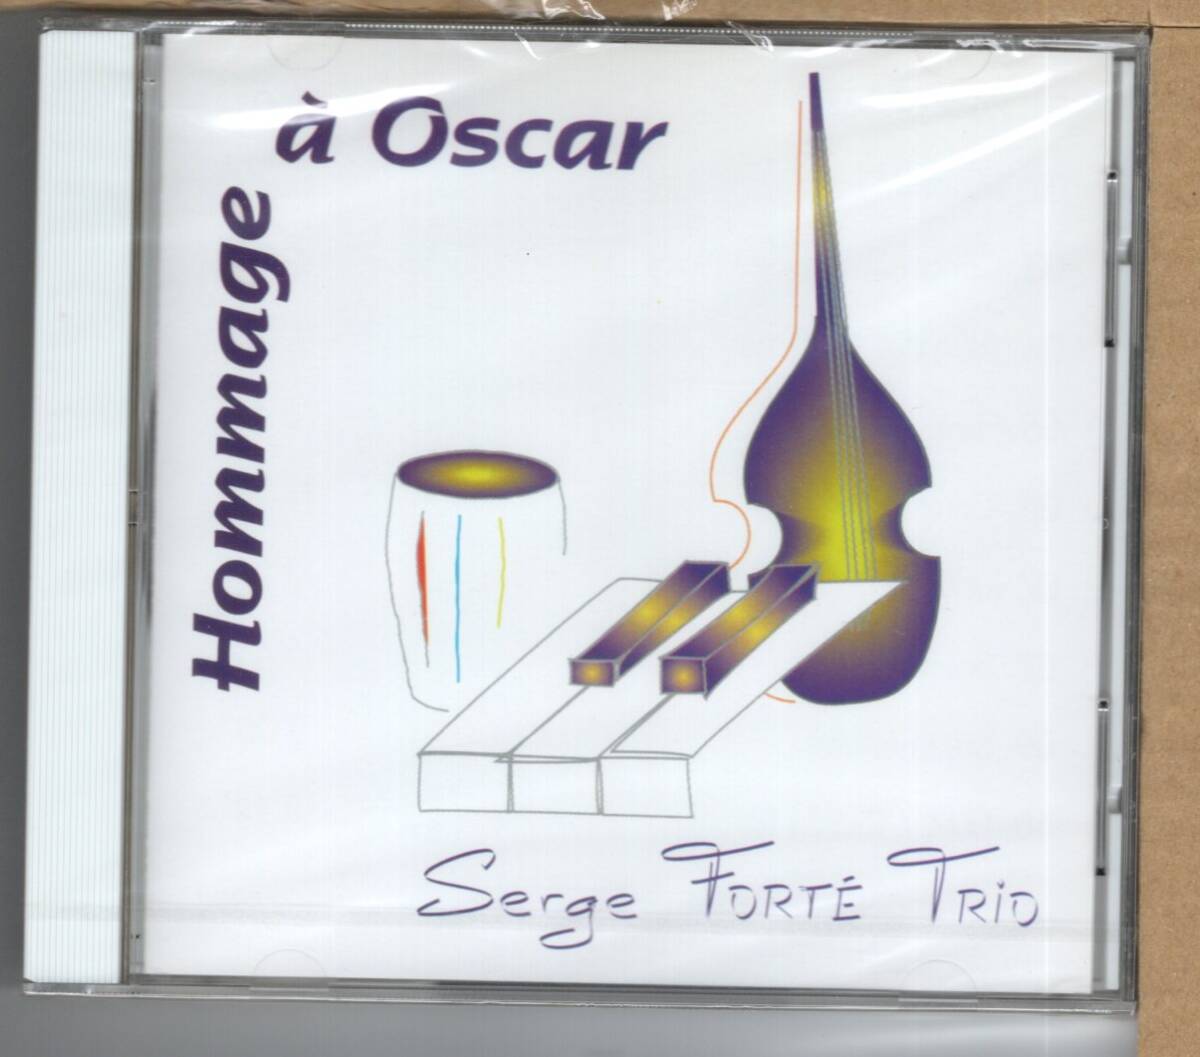 【新品CD】SERGE FORTE TRIO / HOMMAGE A OSCAR_画像1